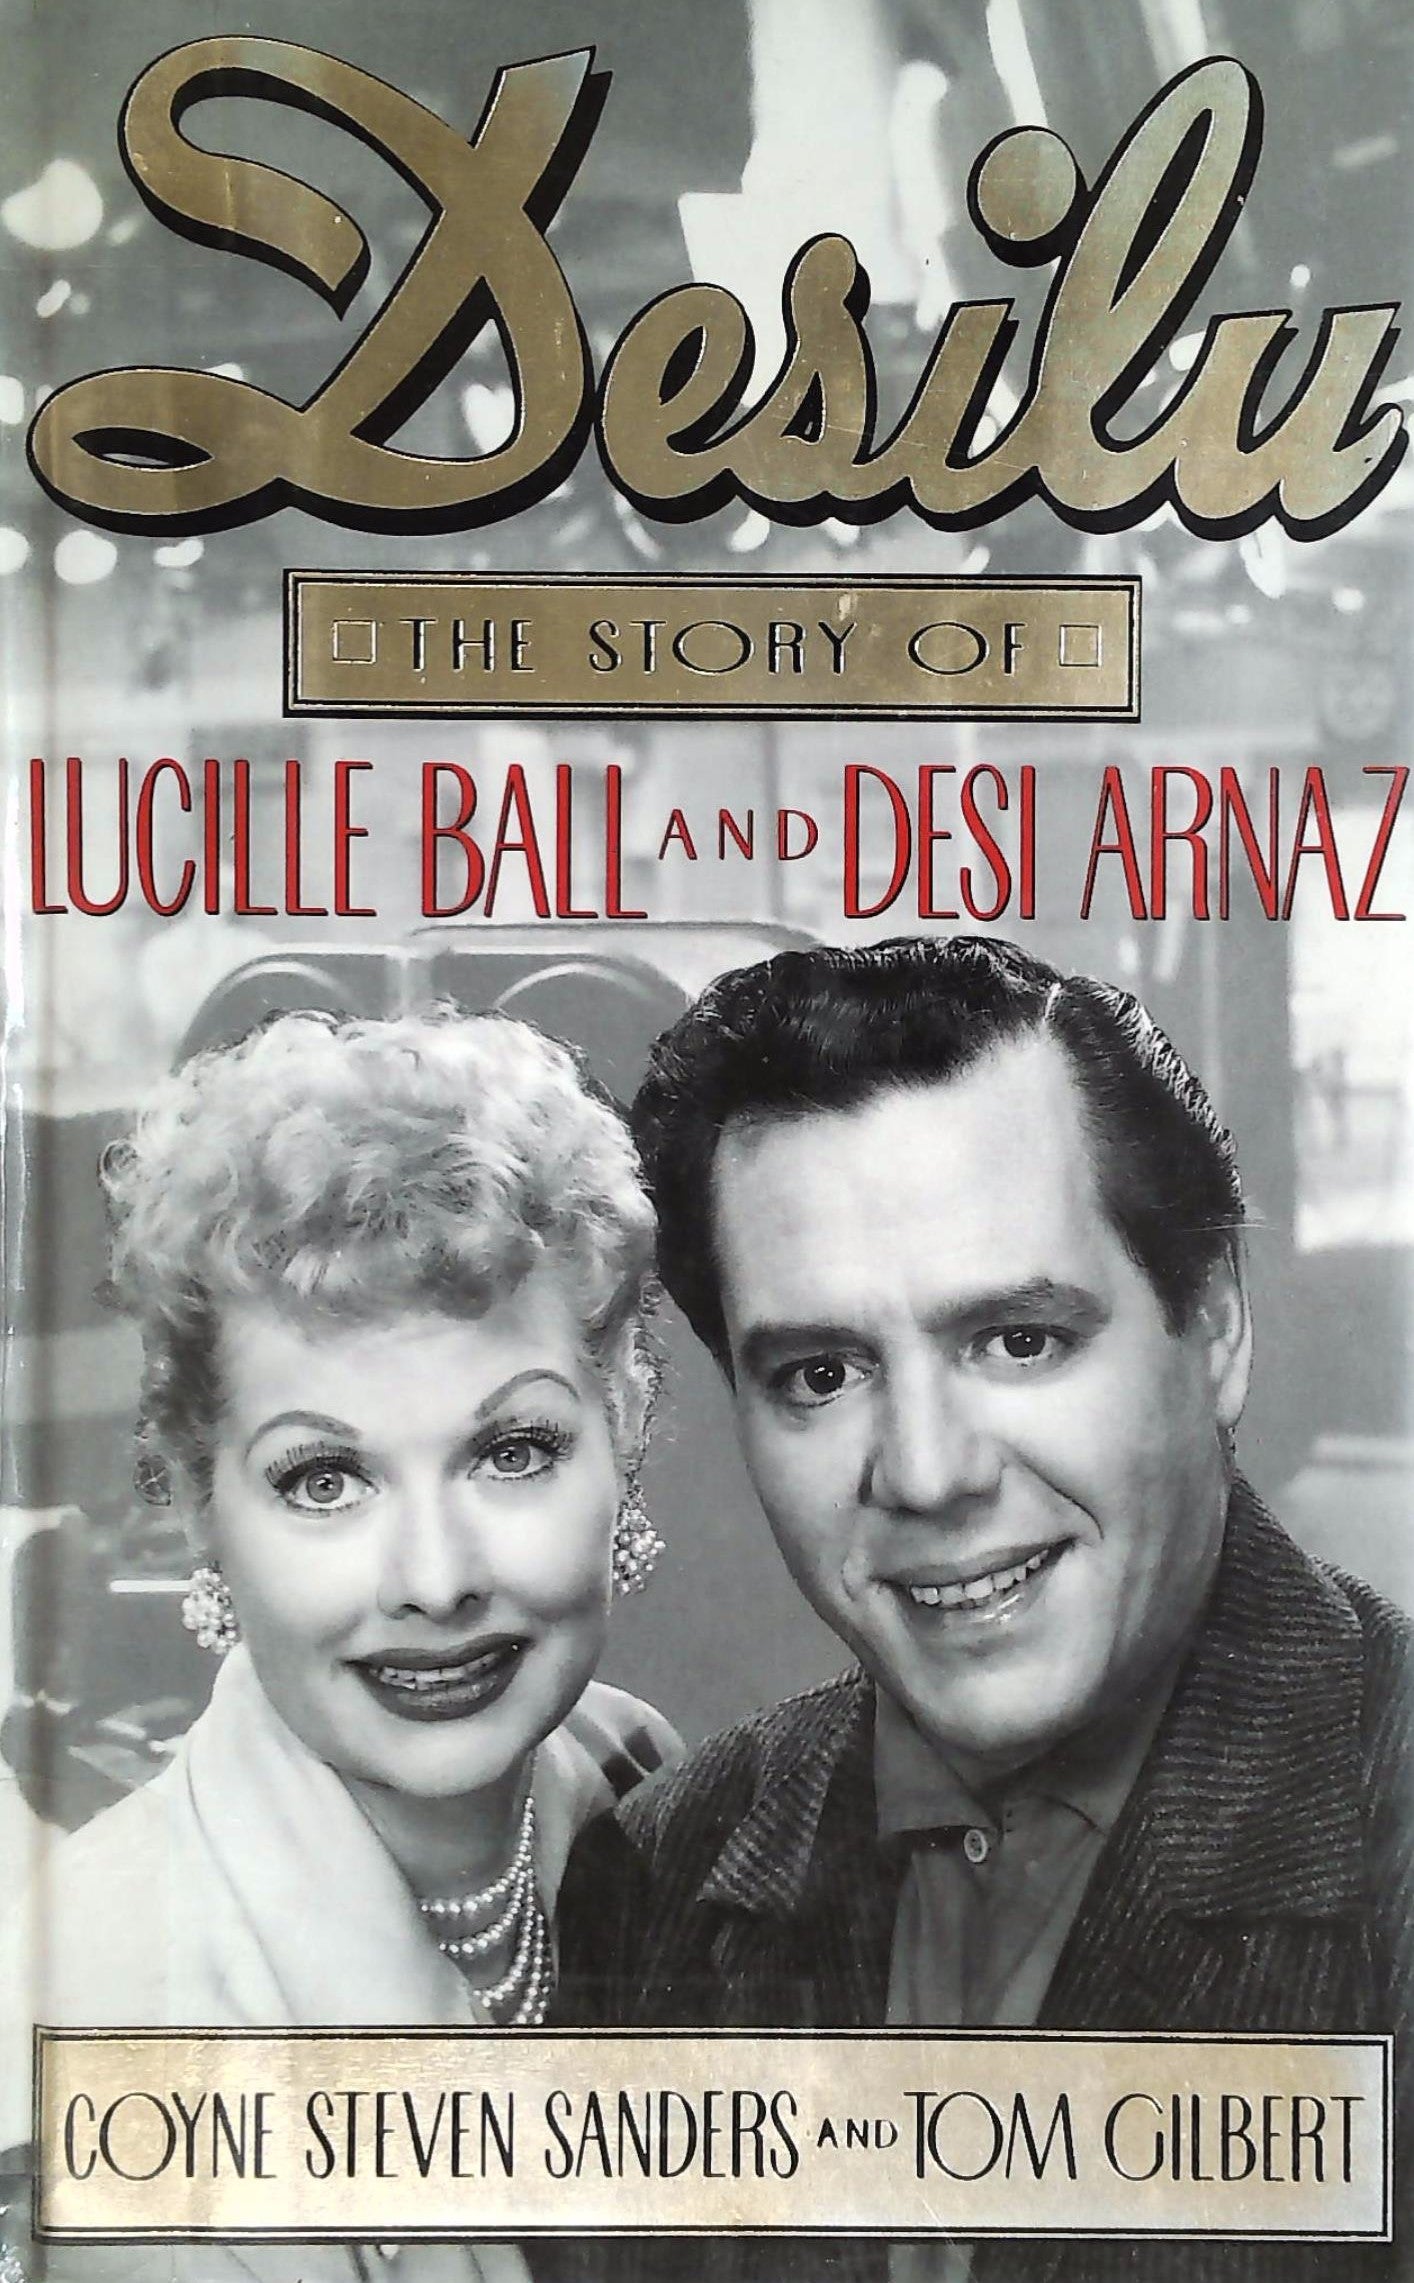 Desilu : The Story of Lucille Ball and Desi Arnaz - Coyne Steven Sanders